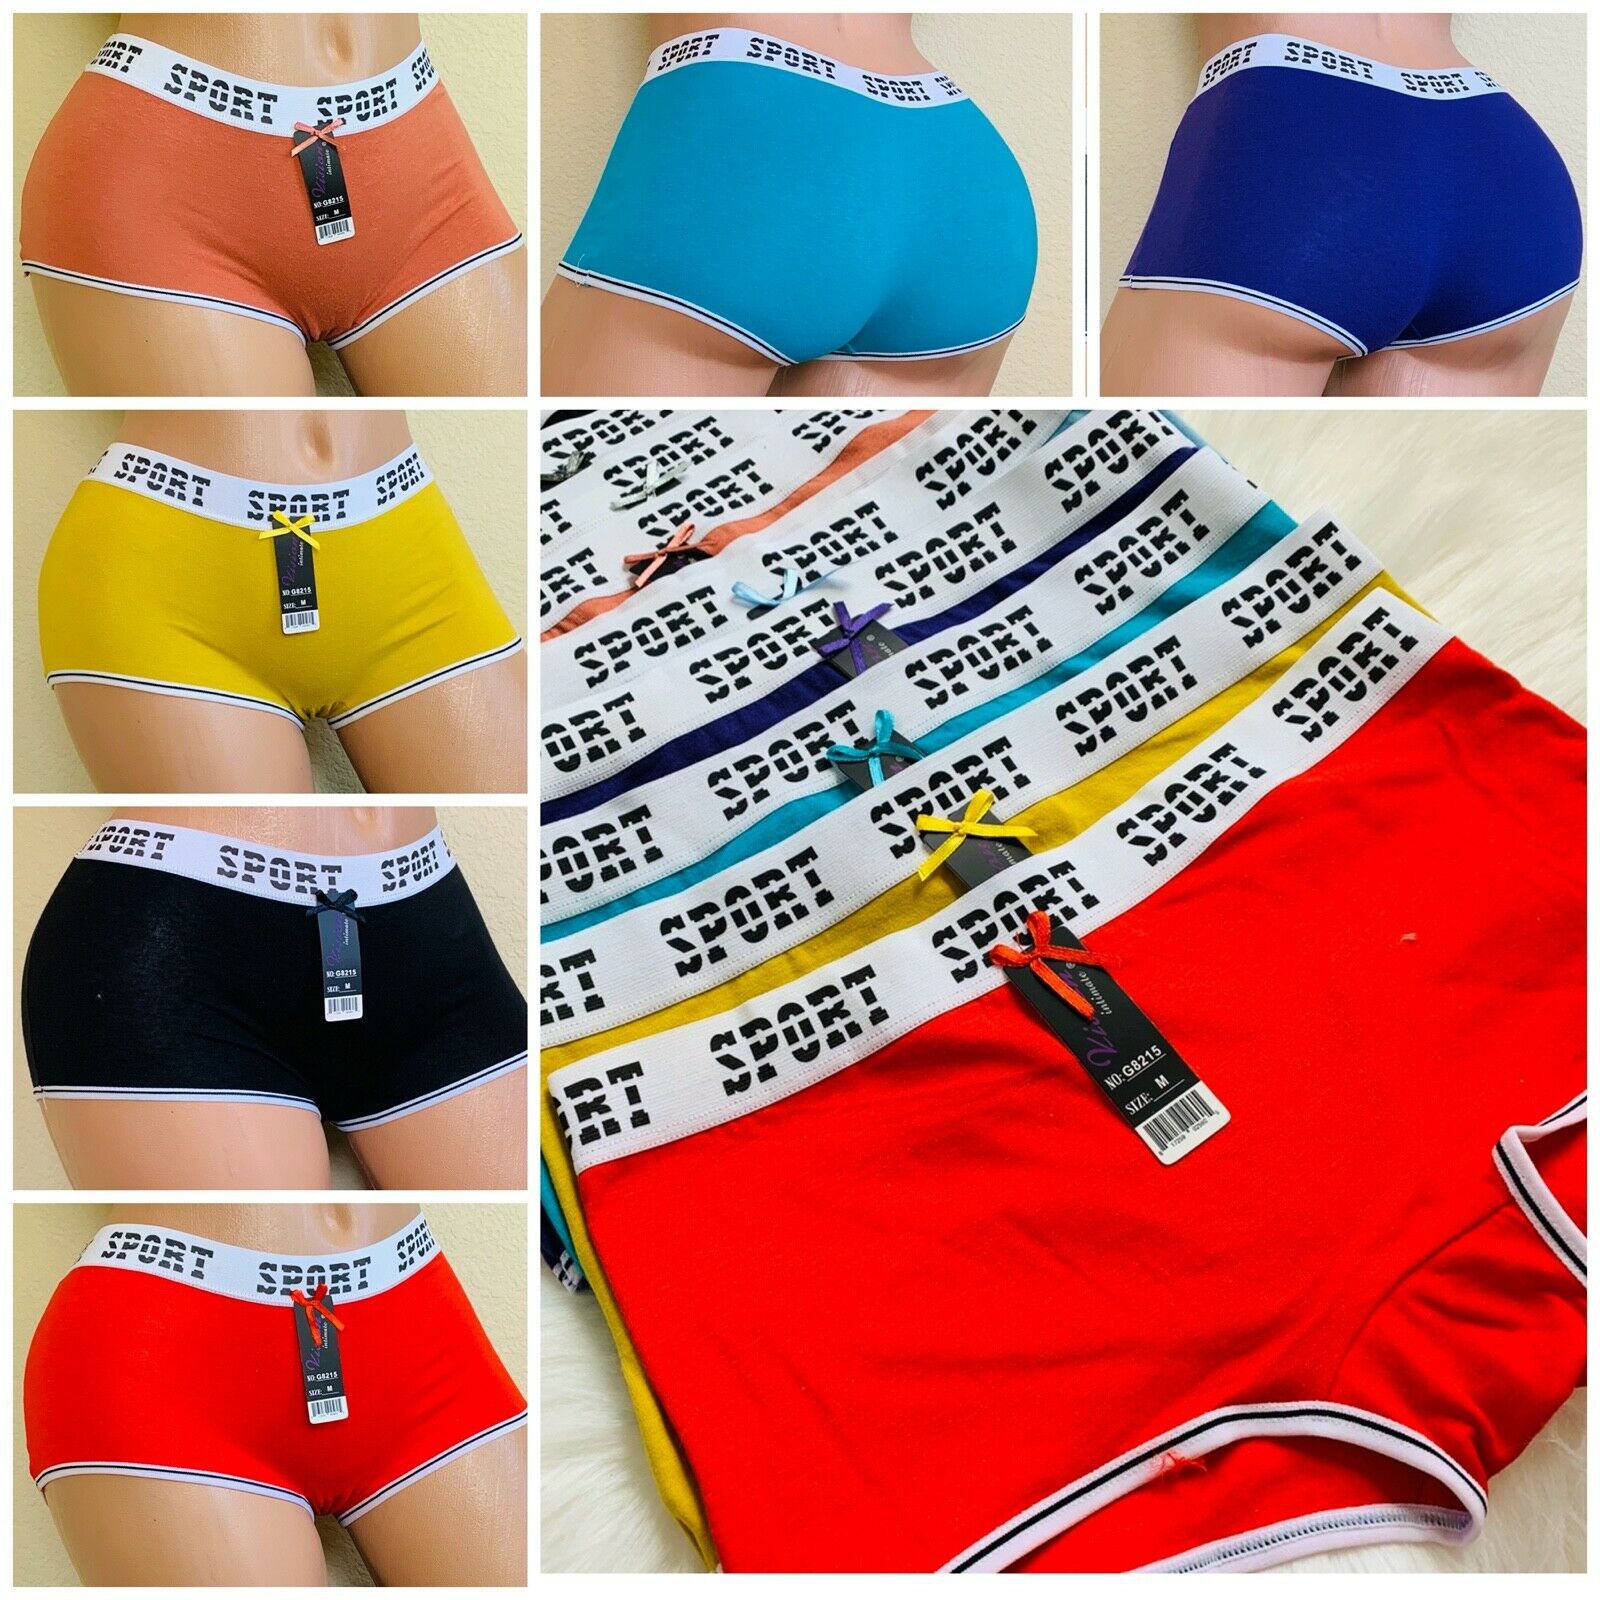 6-12 Boyshorts Sports SEXY 95% COTTON Panties Undies Active Wear